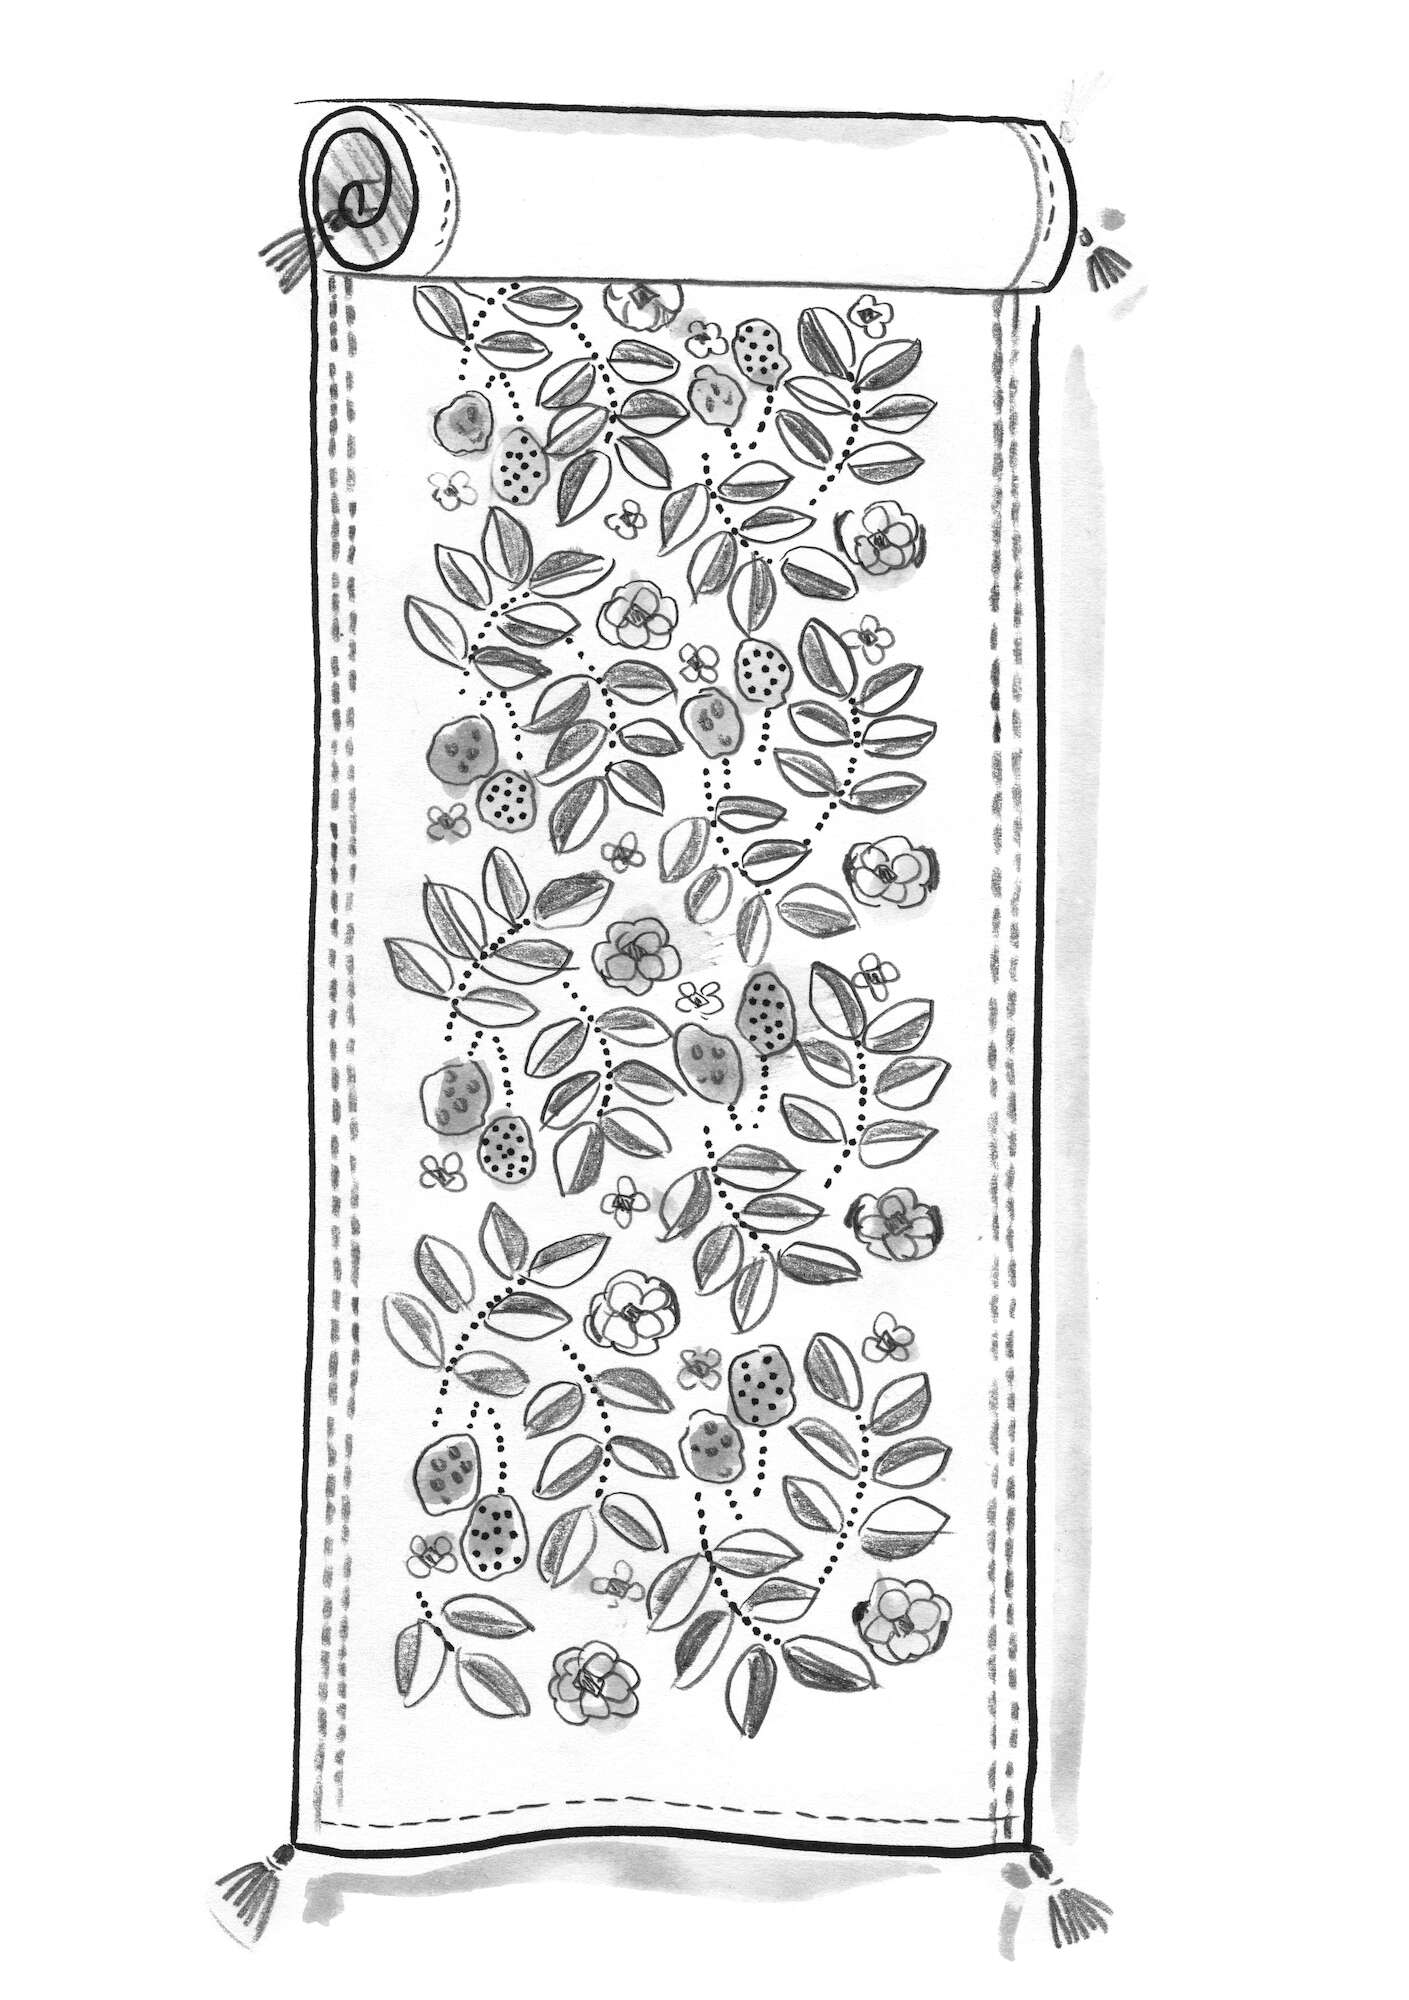  Chemin de table  Tulsi  en coton biologique imprimé au tampon